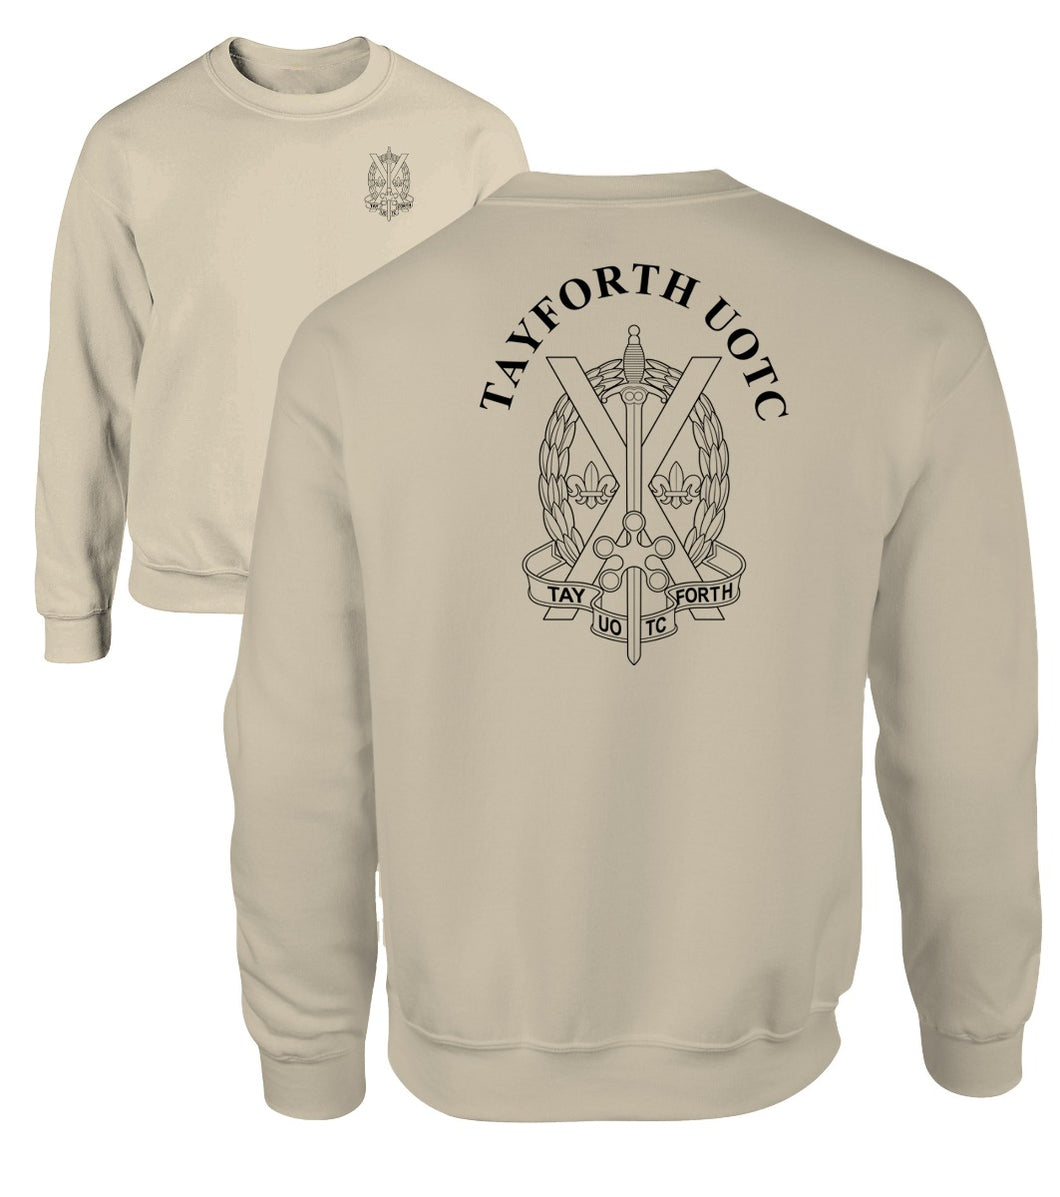 Double Printed Tayforth (UOTC) Sweatshirt